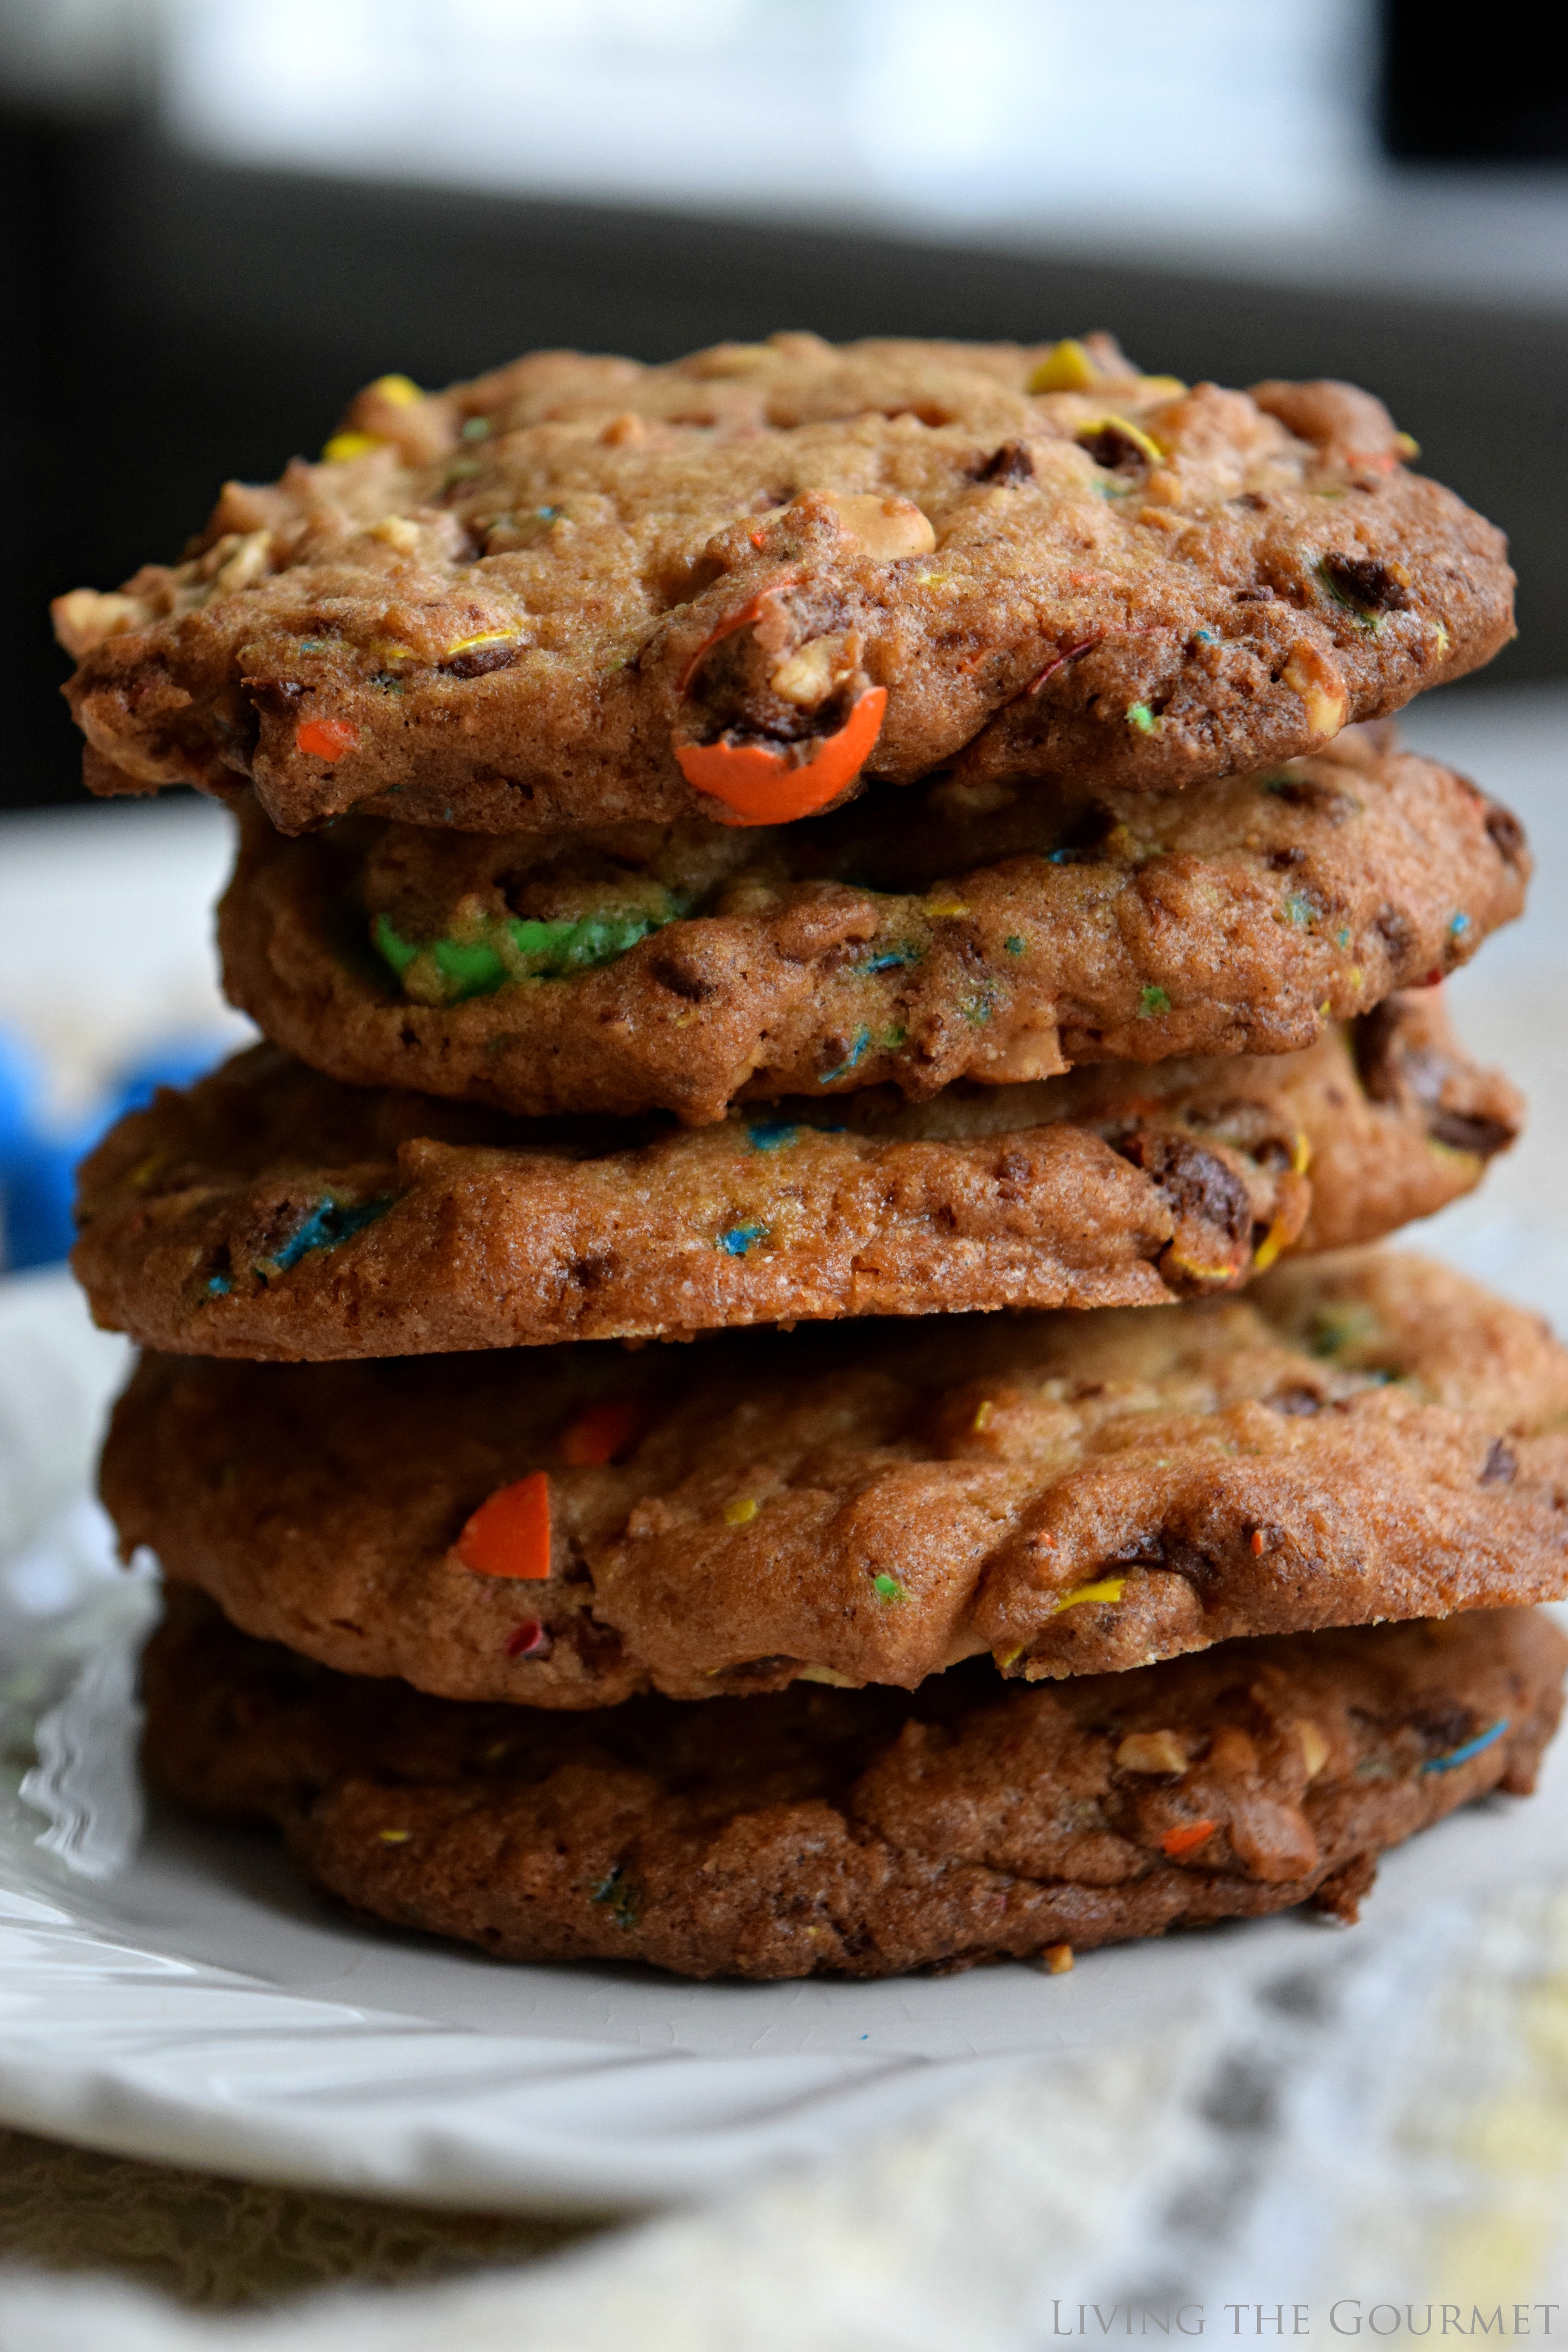 Living the Gourmet: Peanut M&M's® Cookies